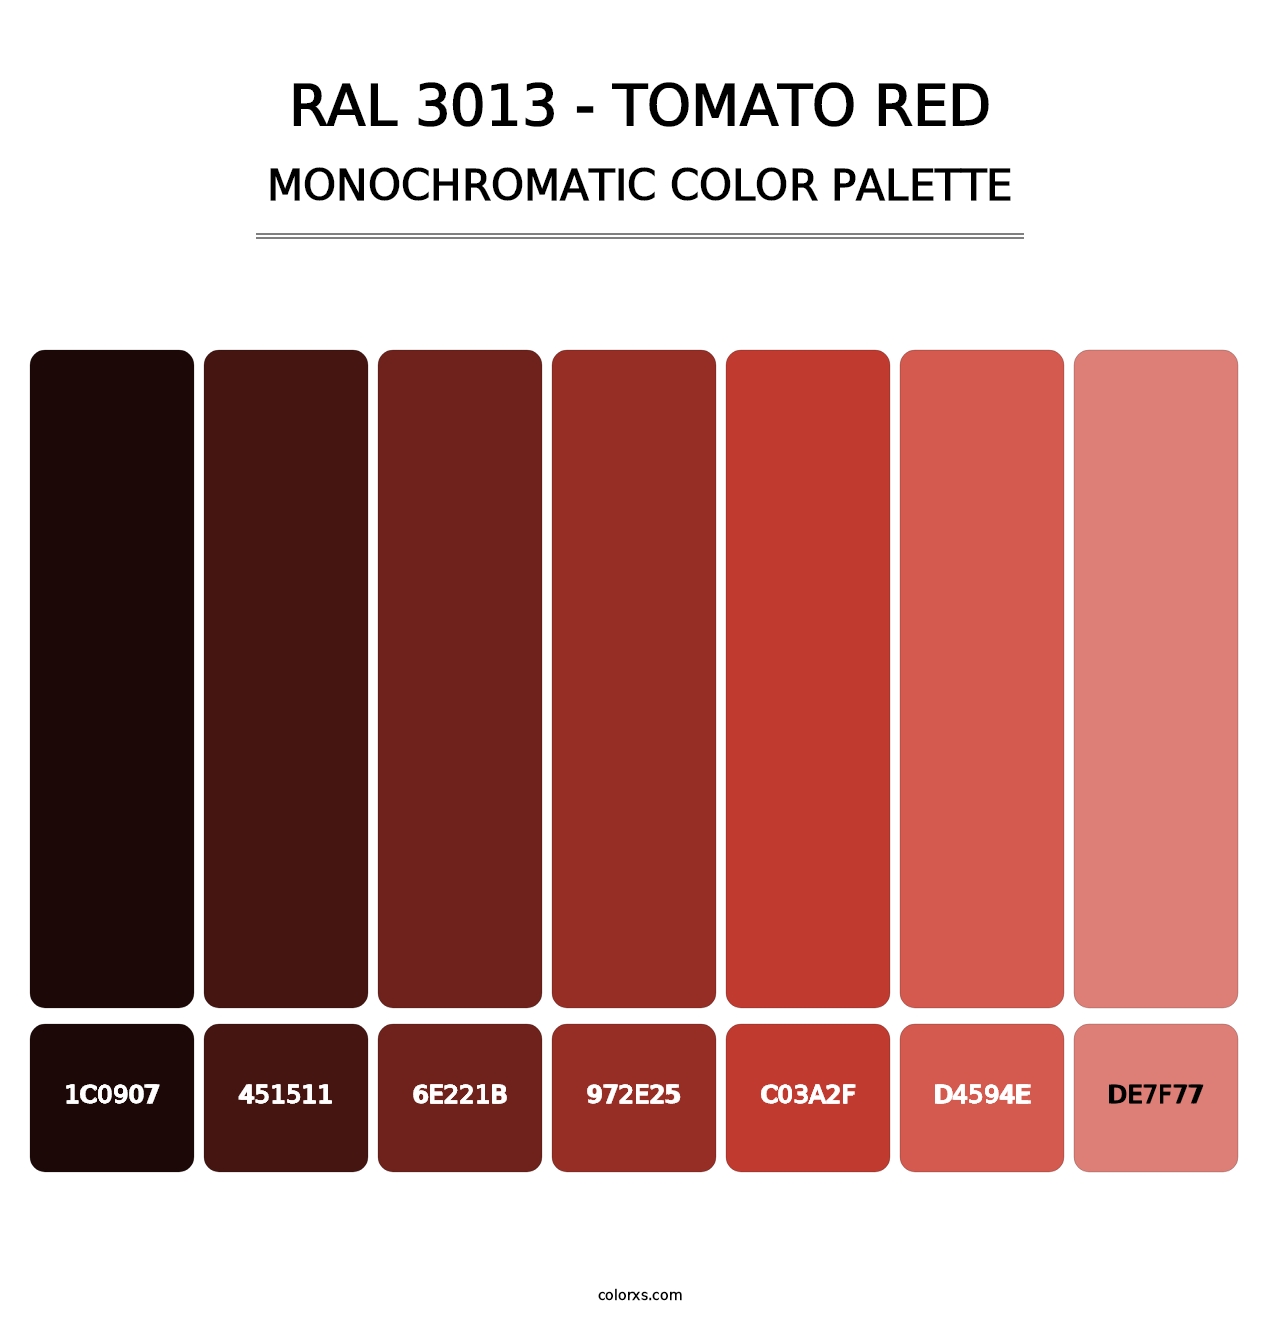 RAL 3013 - Tomato Red - Monochromatic Color Palette